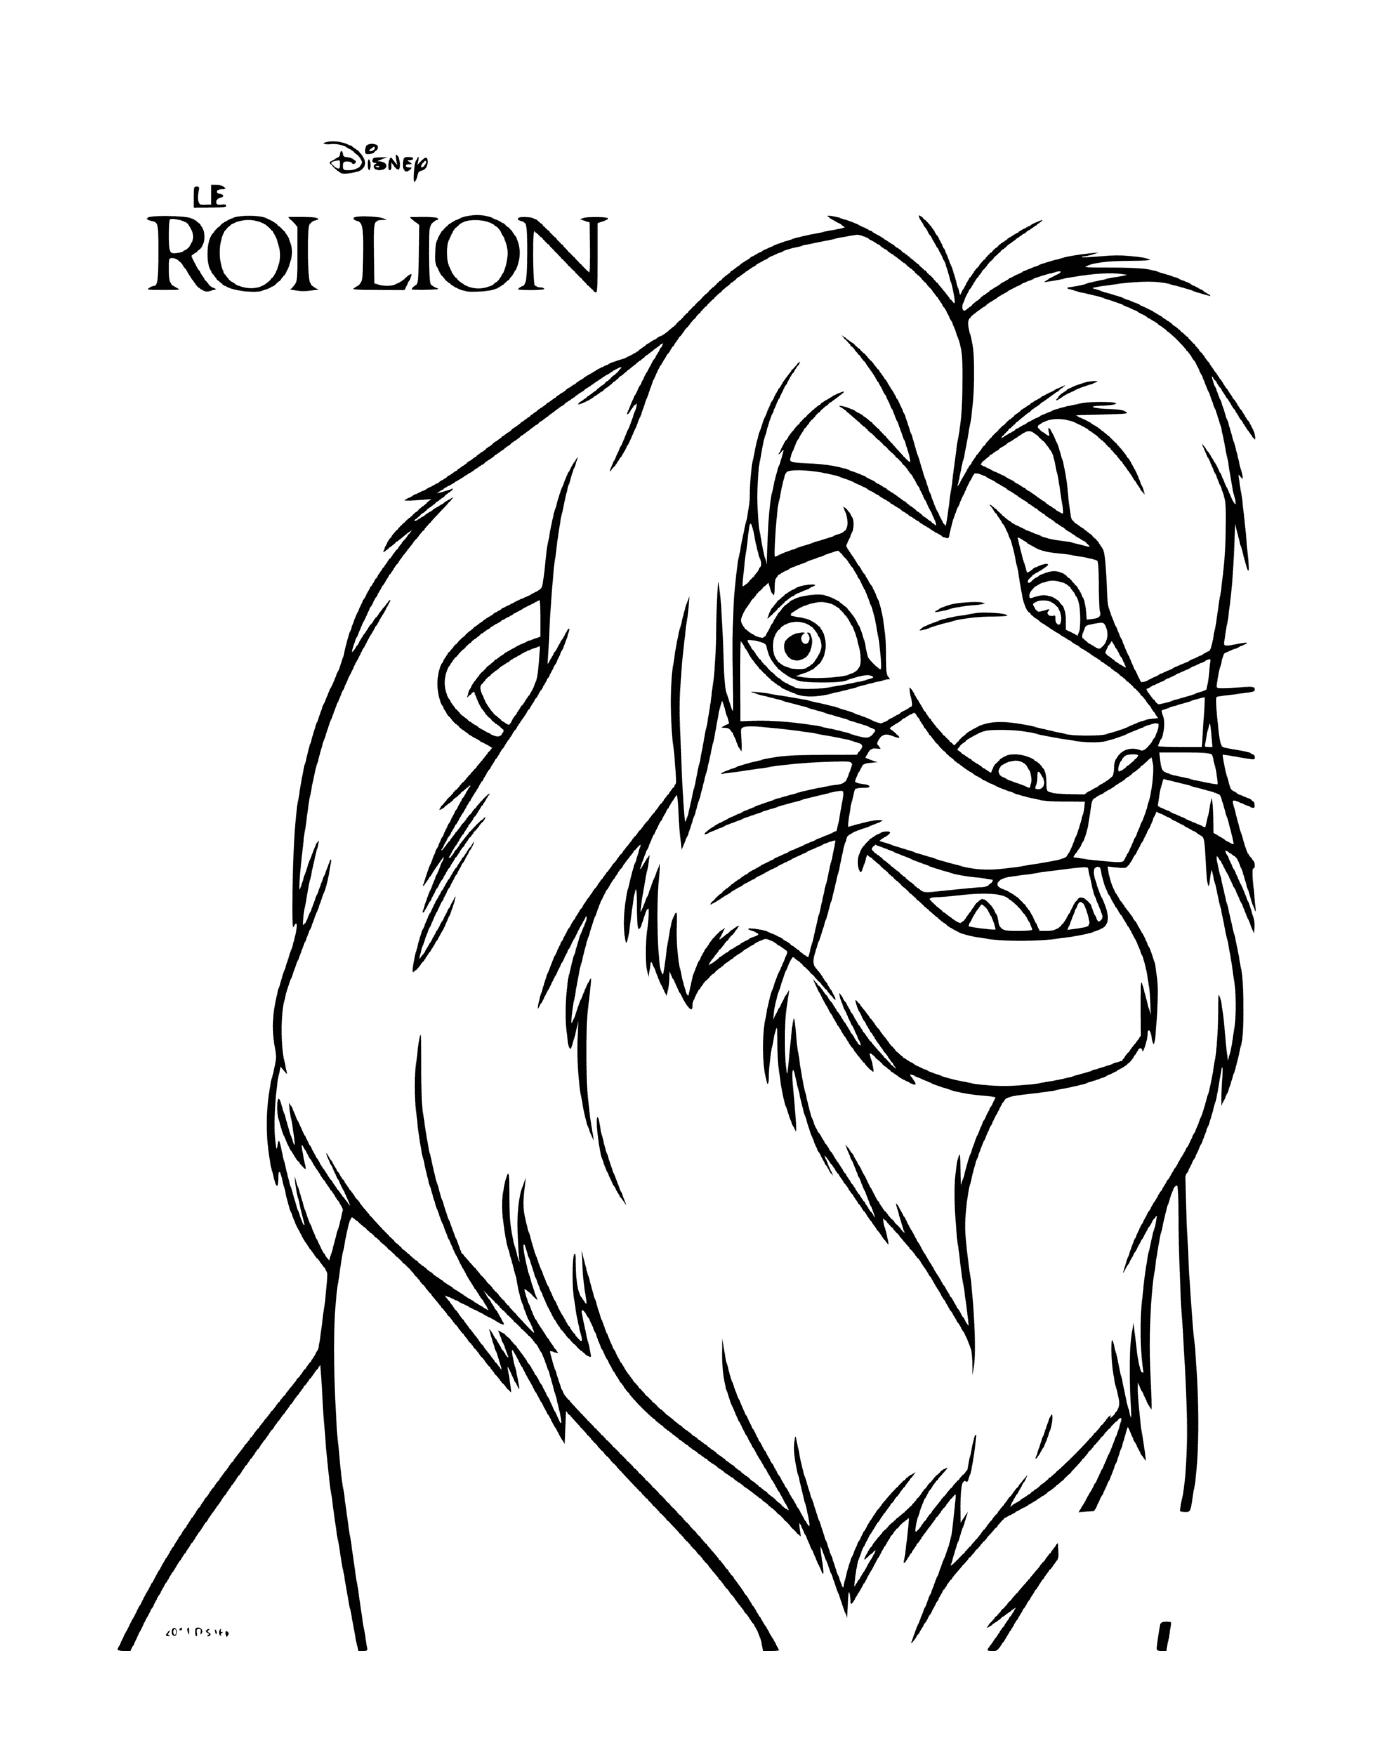   Le futur roi lion, Simba 